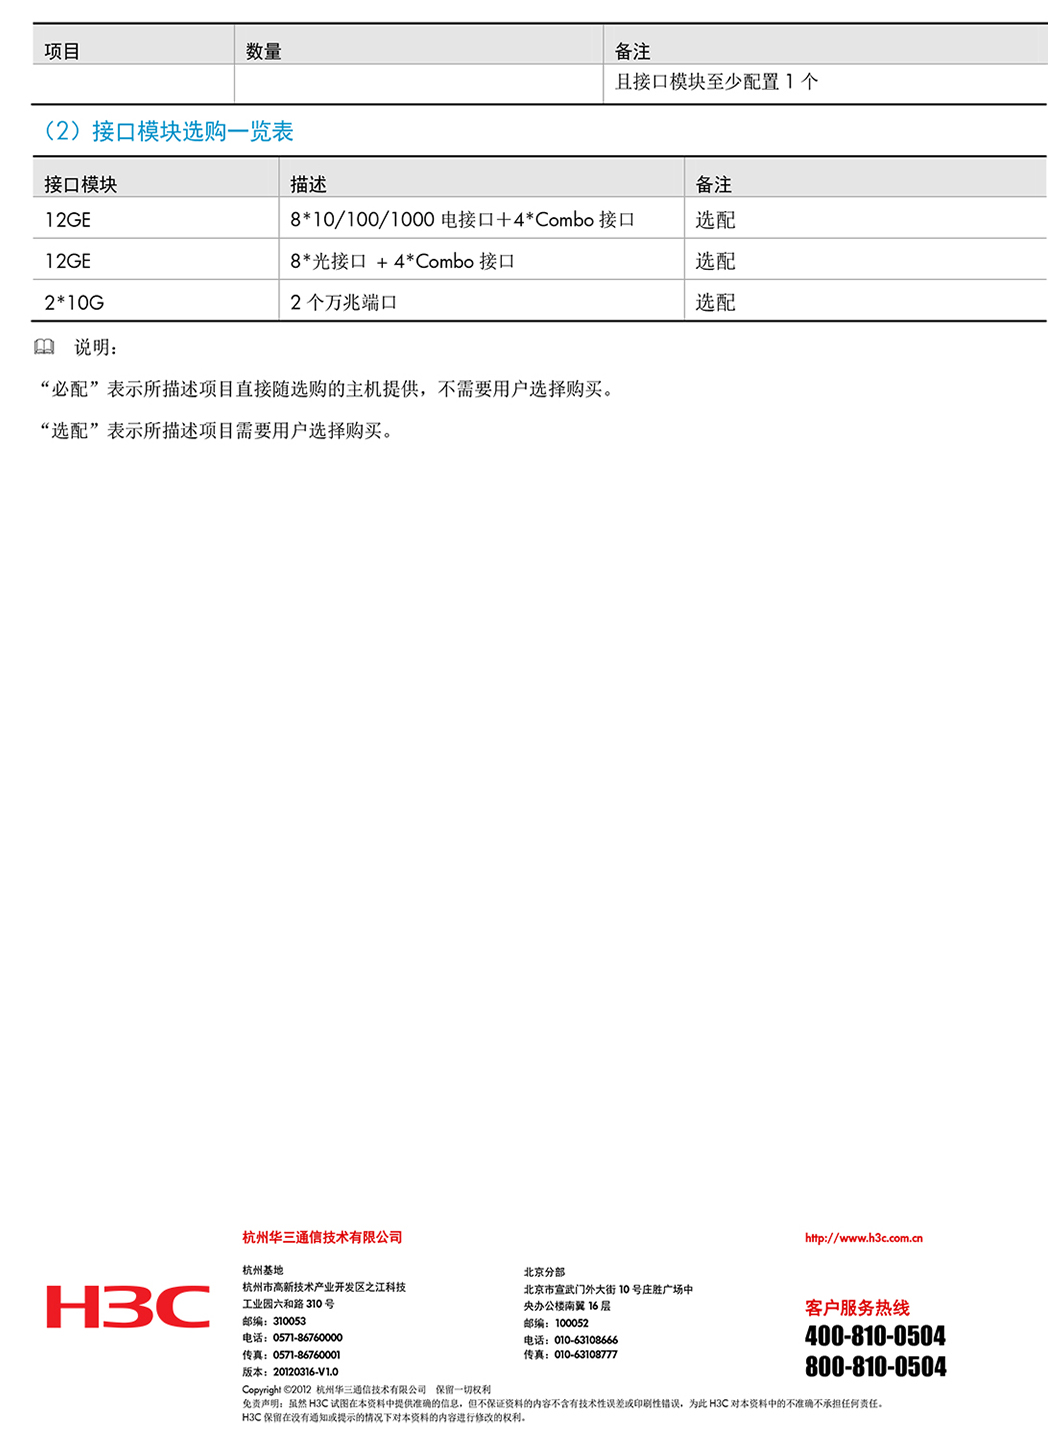 华三SecPath F5000-A5防火墙